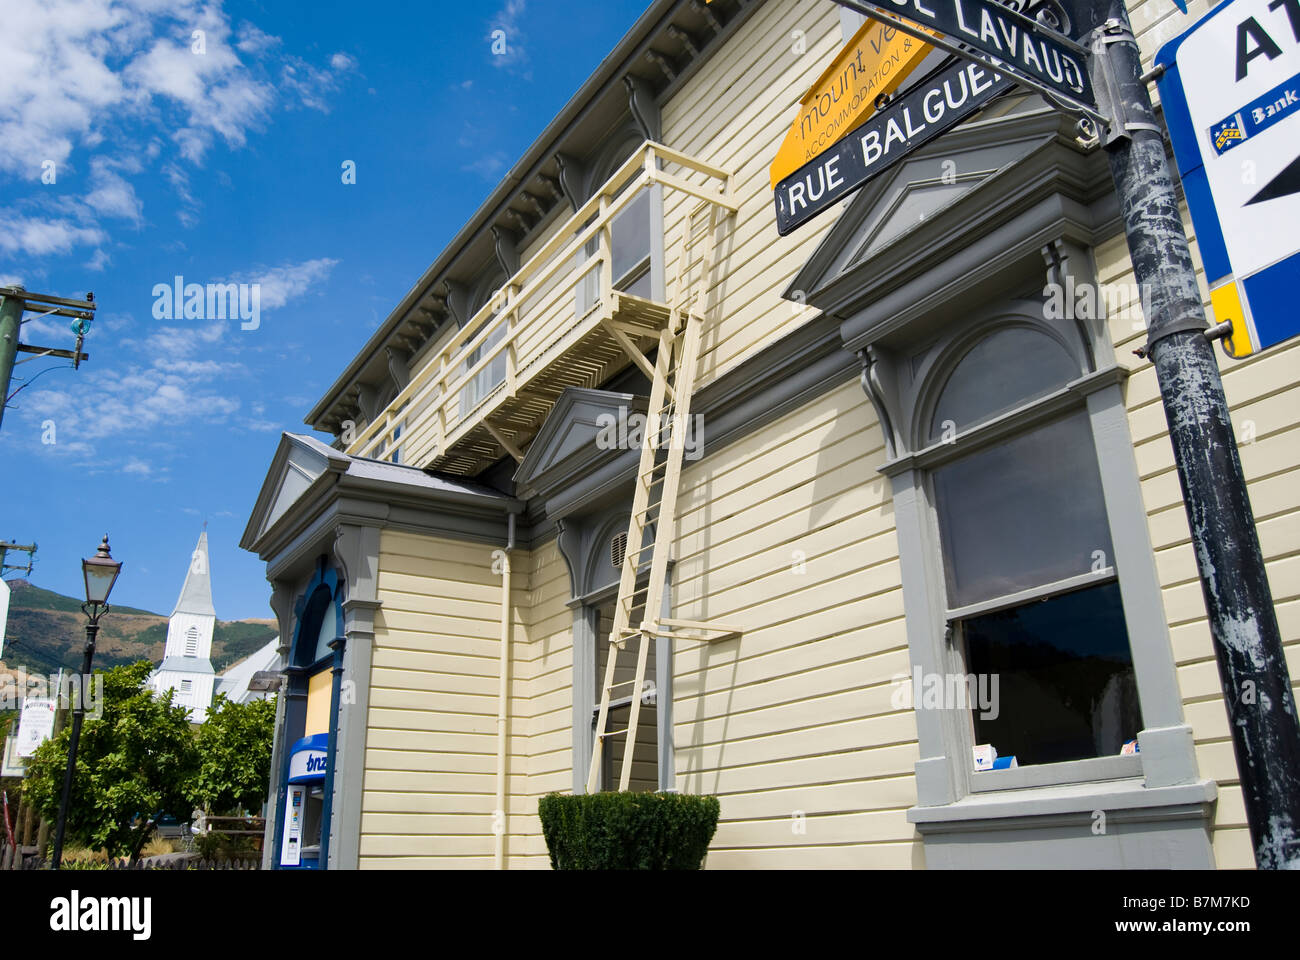 Bank of New Zealand Gebäude, Rue Balguerie, Akaroa, Banks Peninsula, Canterbury, Neuseeland Stockfoto